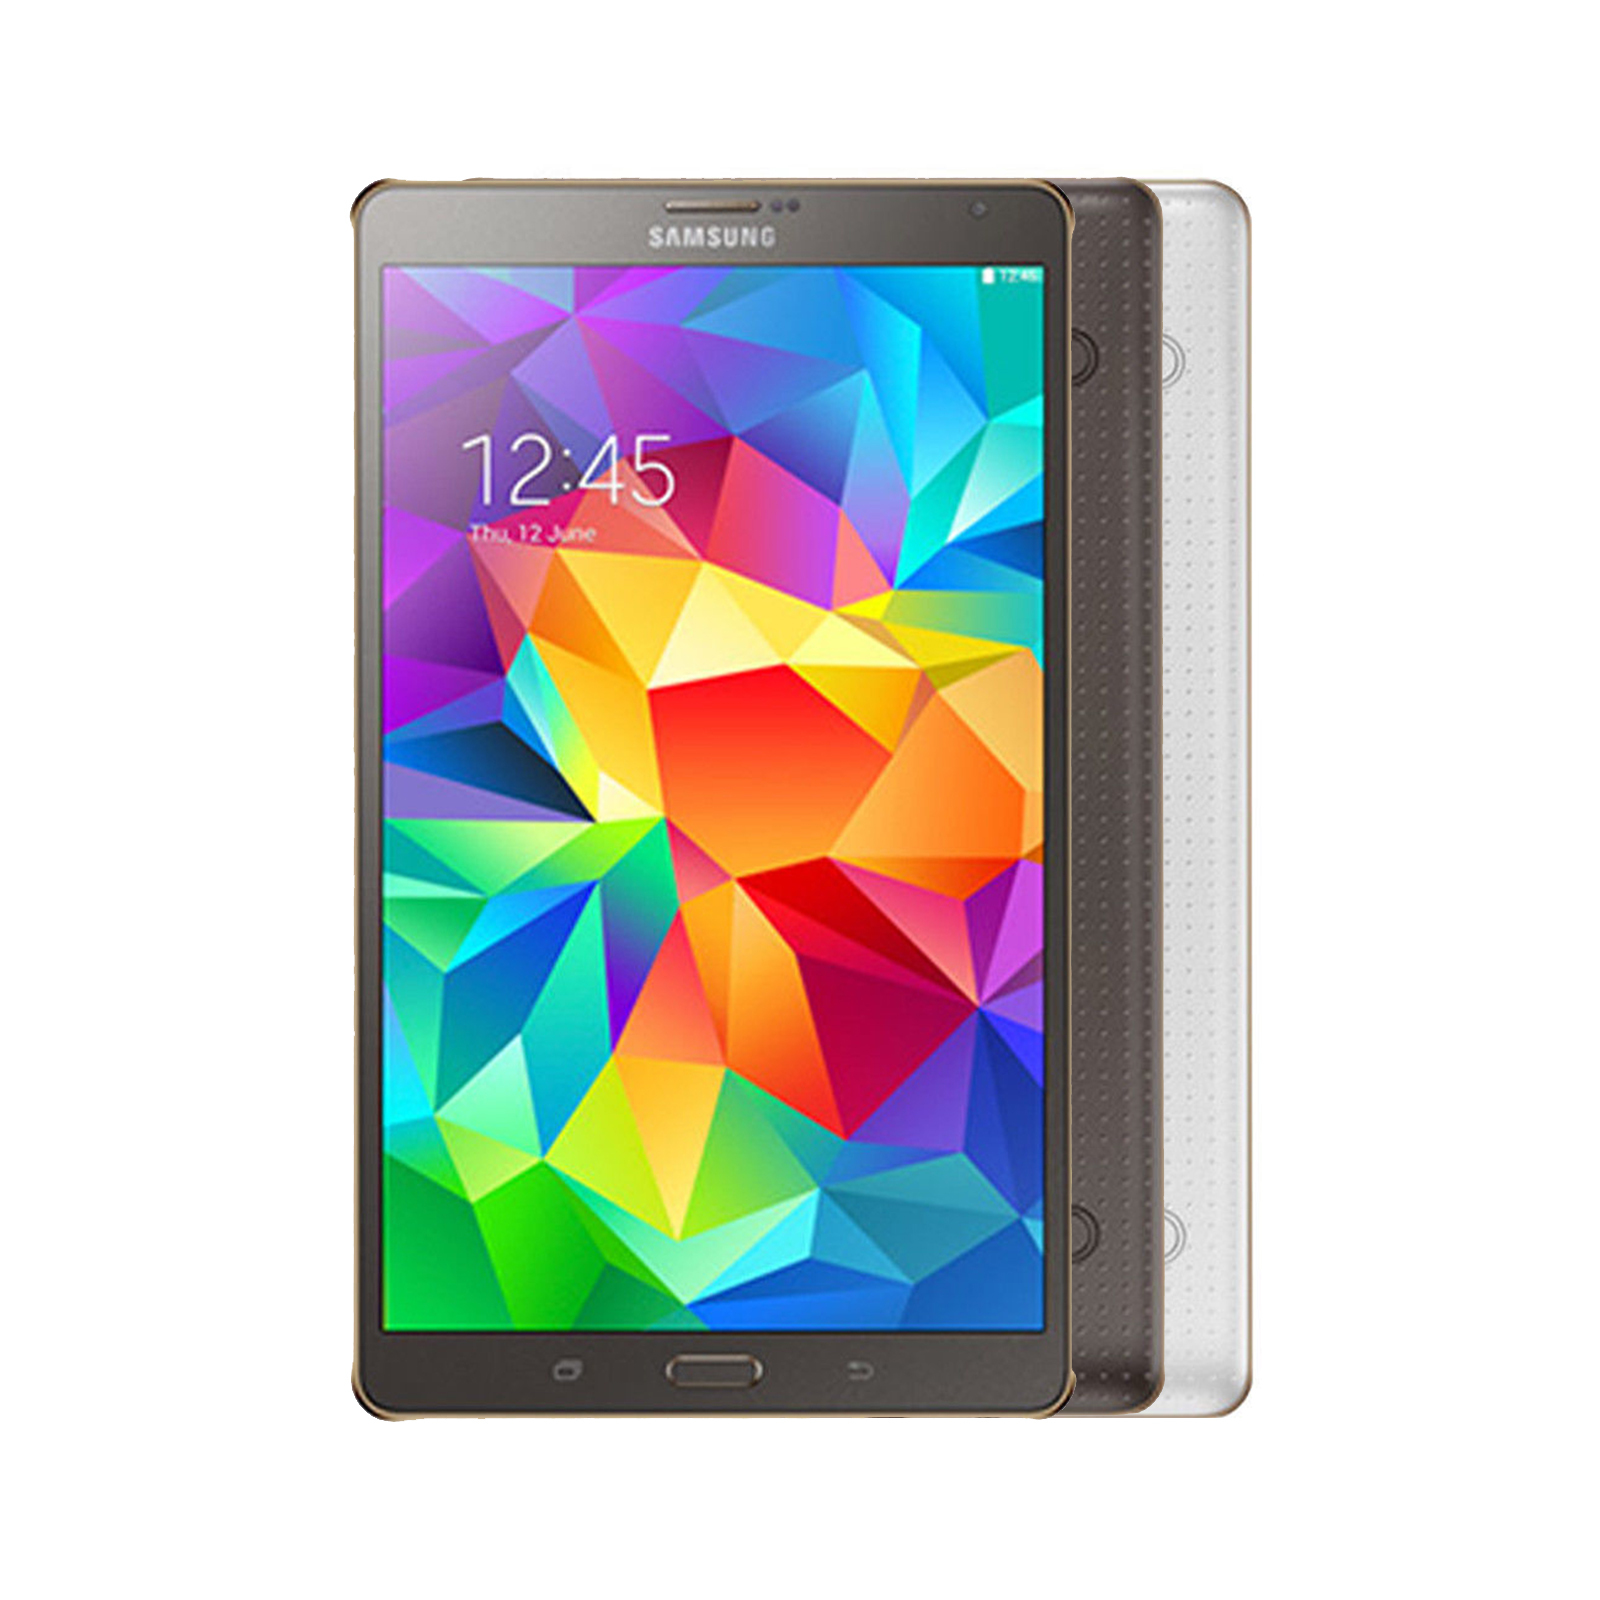 Samsung Galaxy Tab S 8.4 T700 - Good Condition